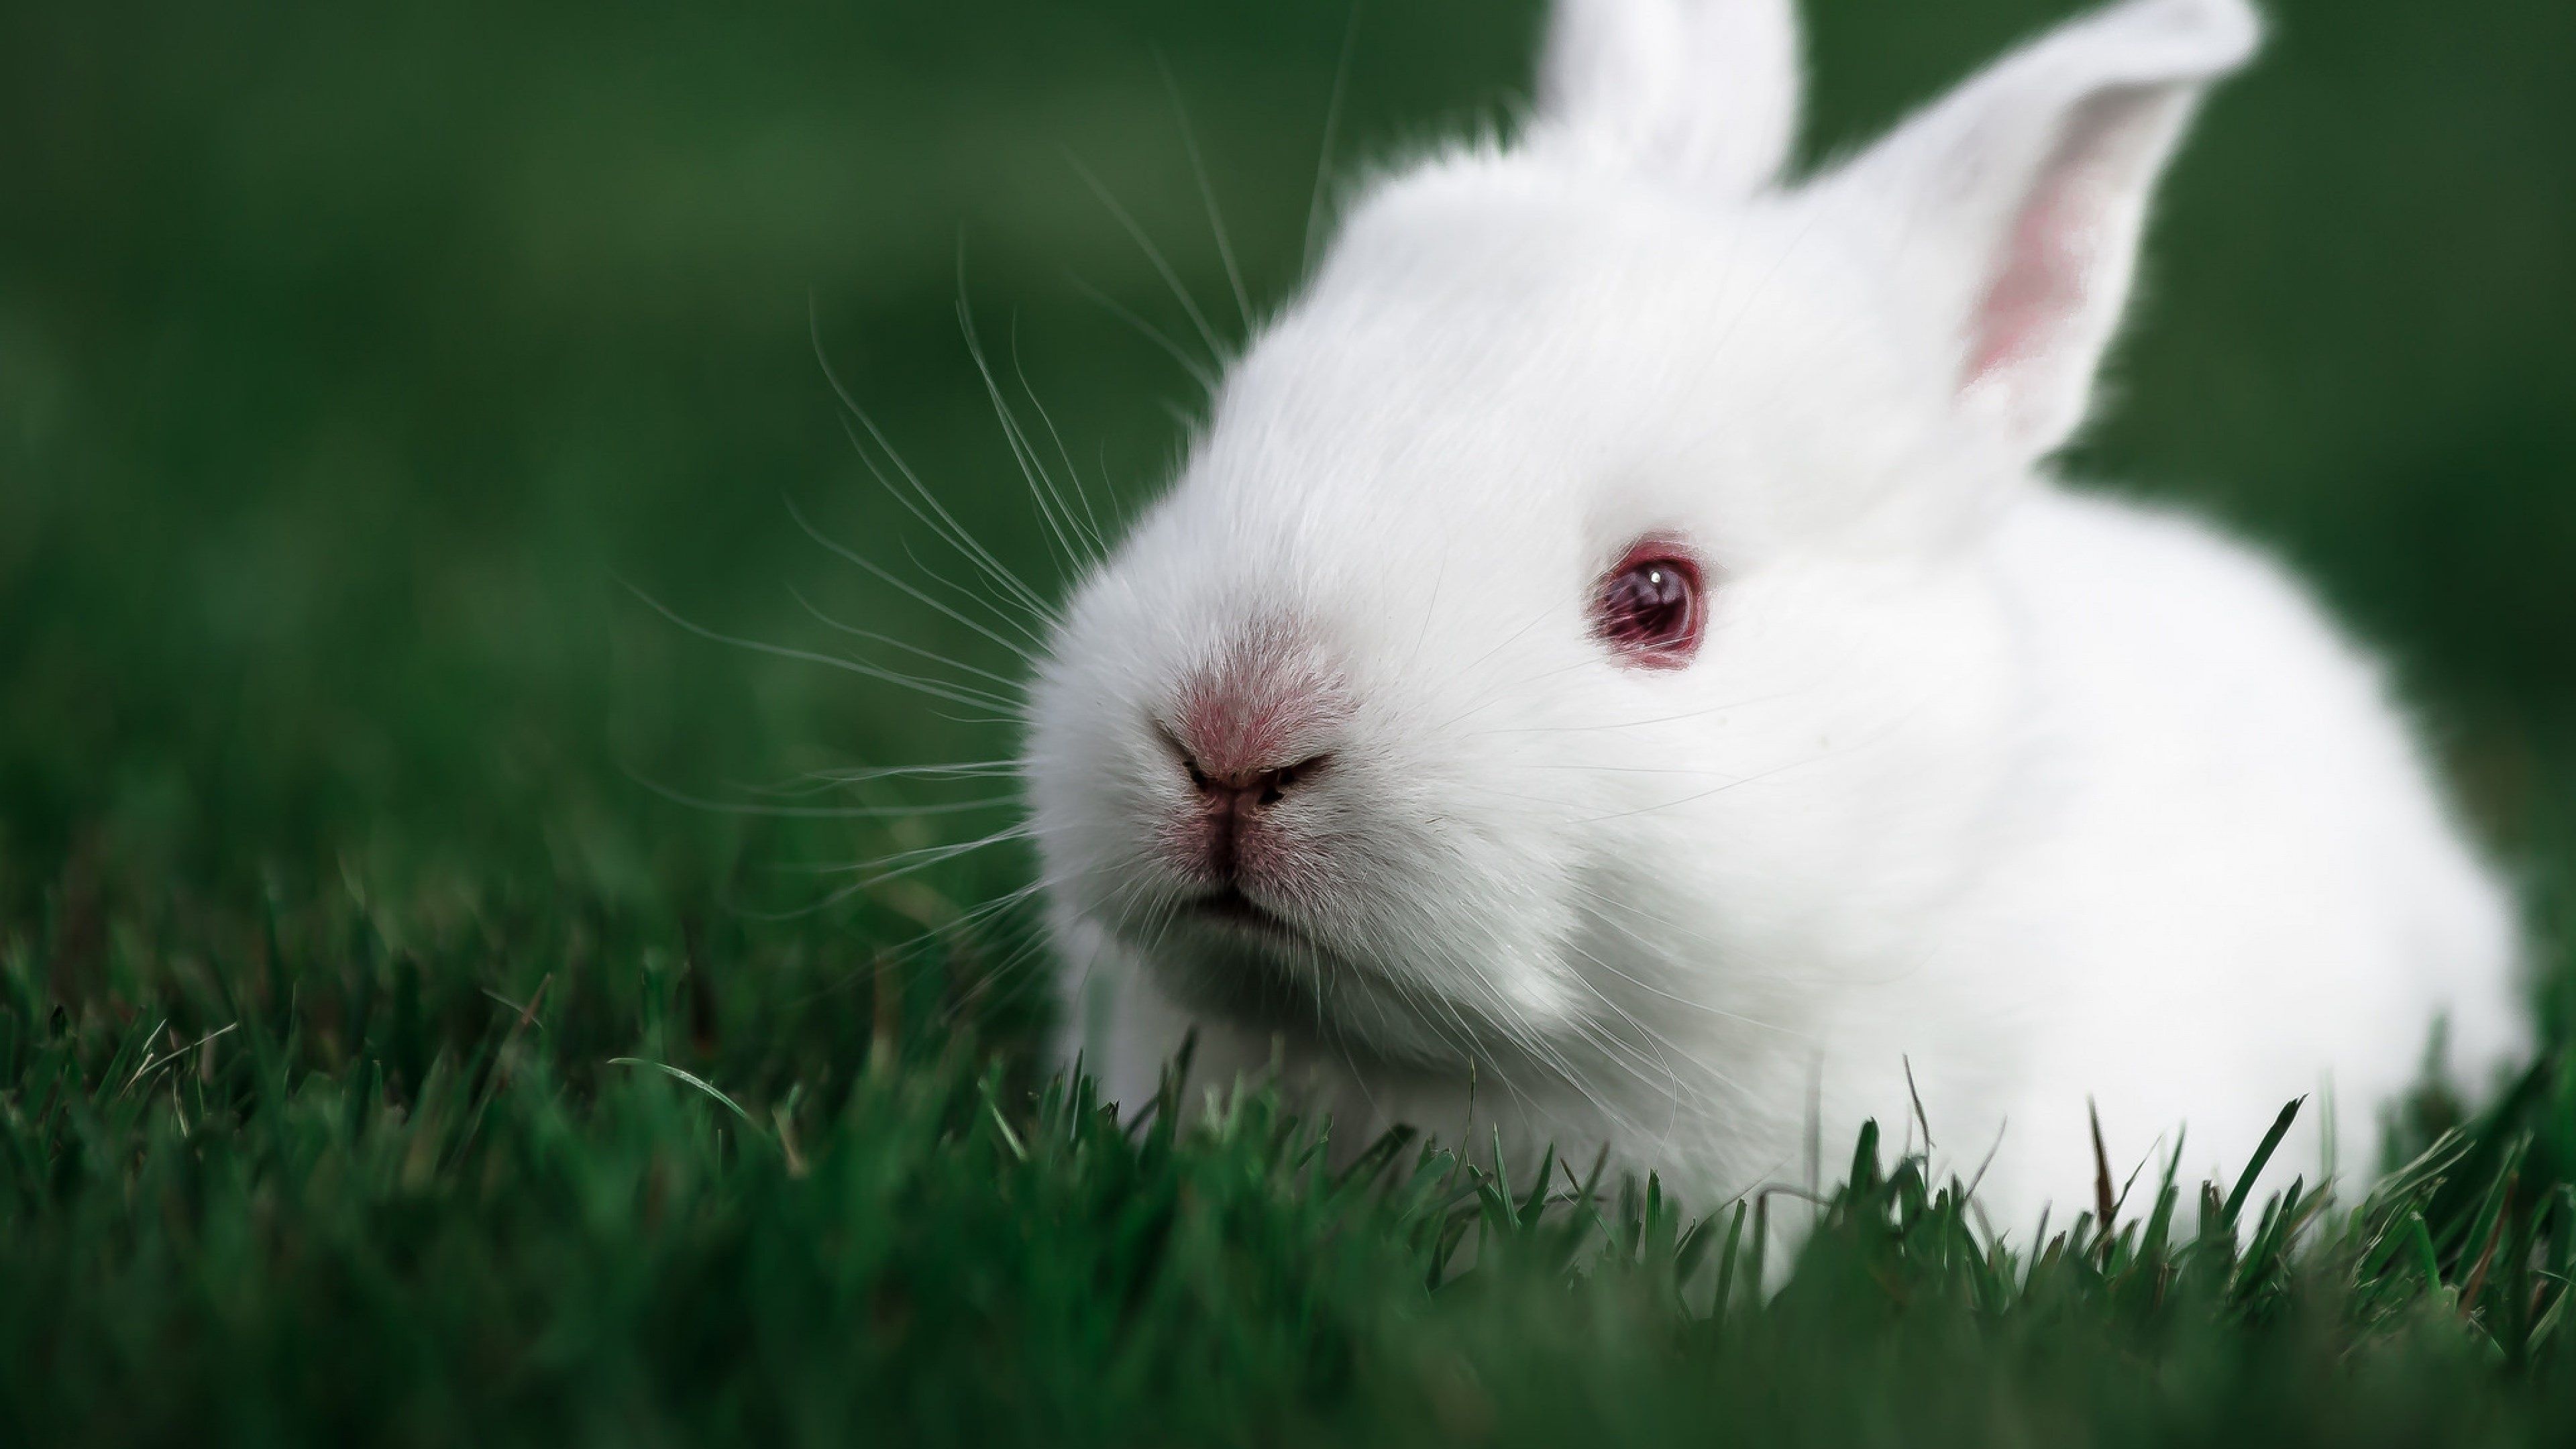 Rabbit wallpaper, Beautiful rabbit, Baby wild animals, Nature's charm, 3840x2160 4K Desktop